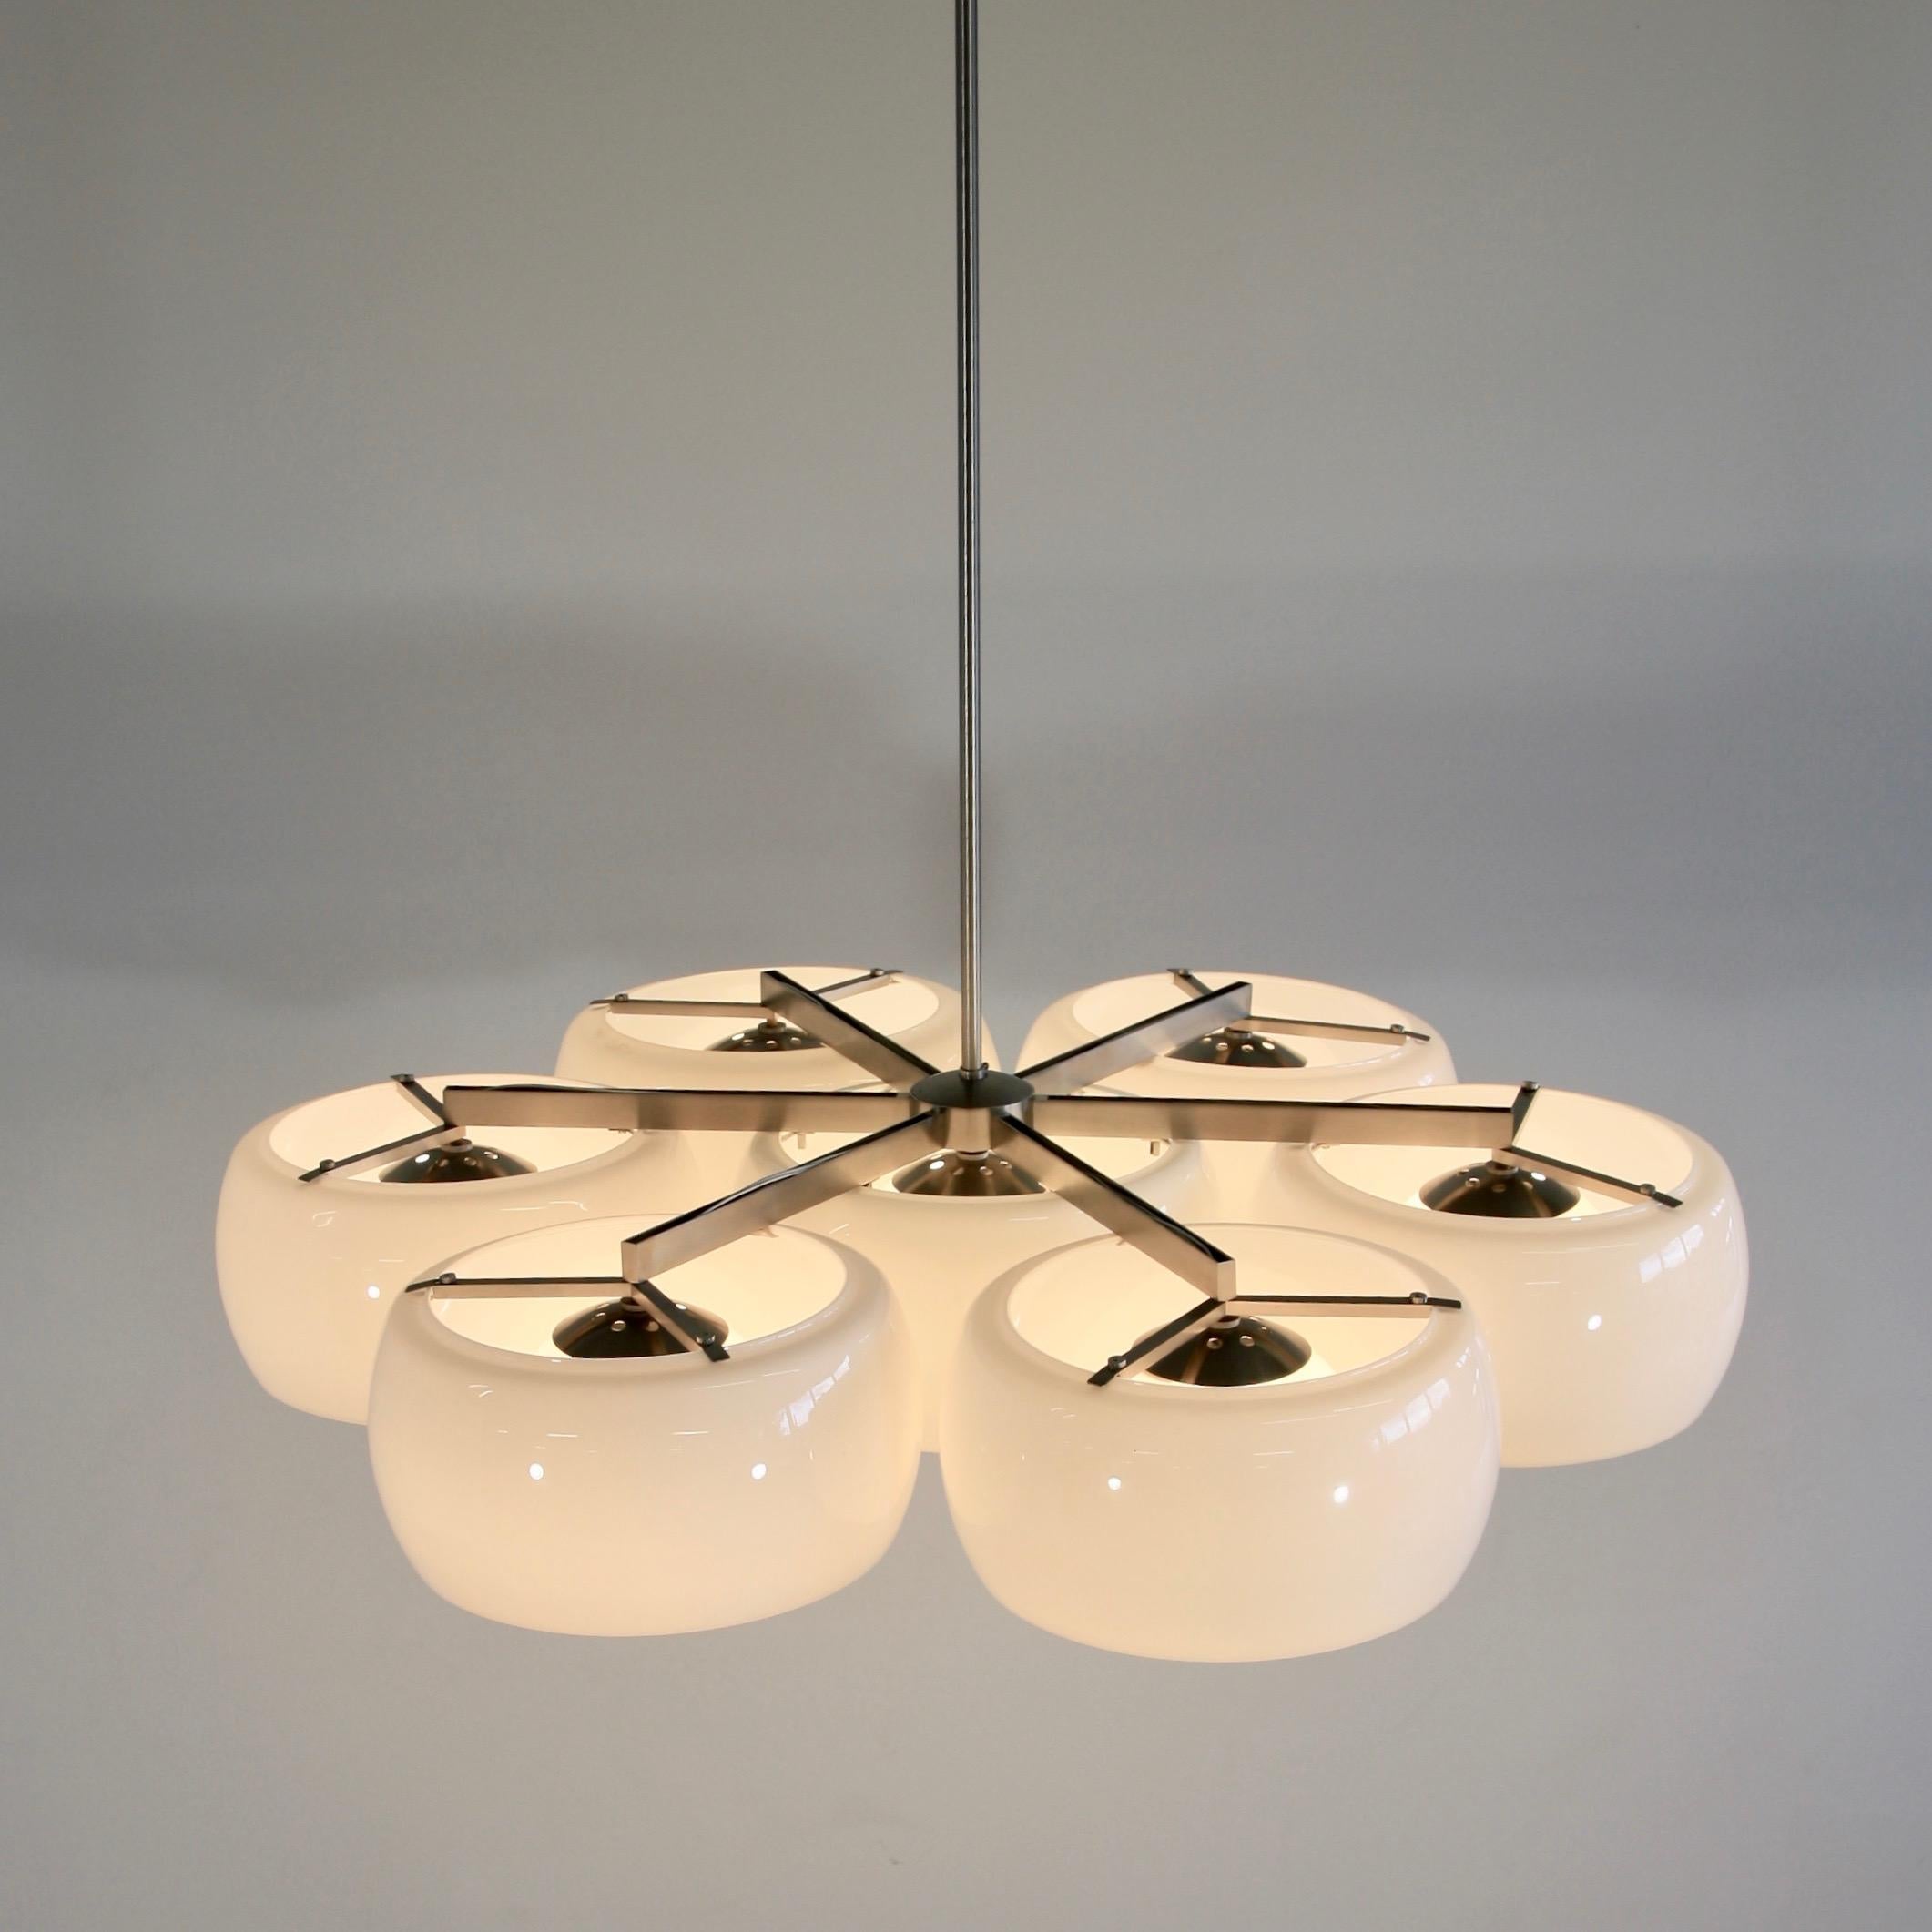 Italian Ceiling Lamp Eptaclinio Designed by Vico Magistretti for Artemide, 1961